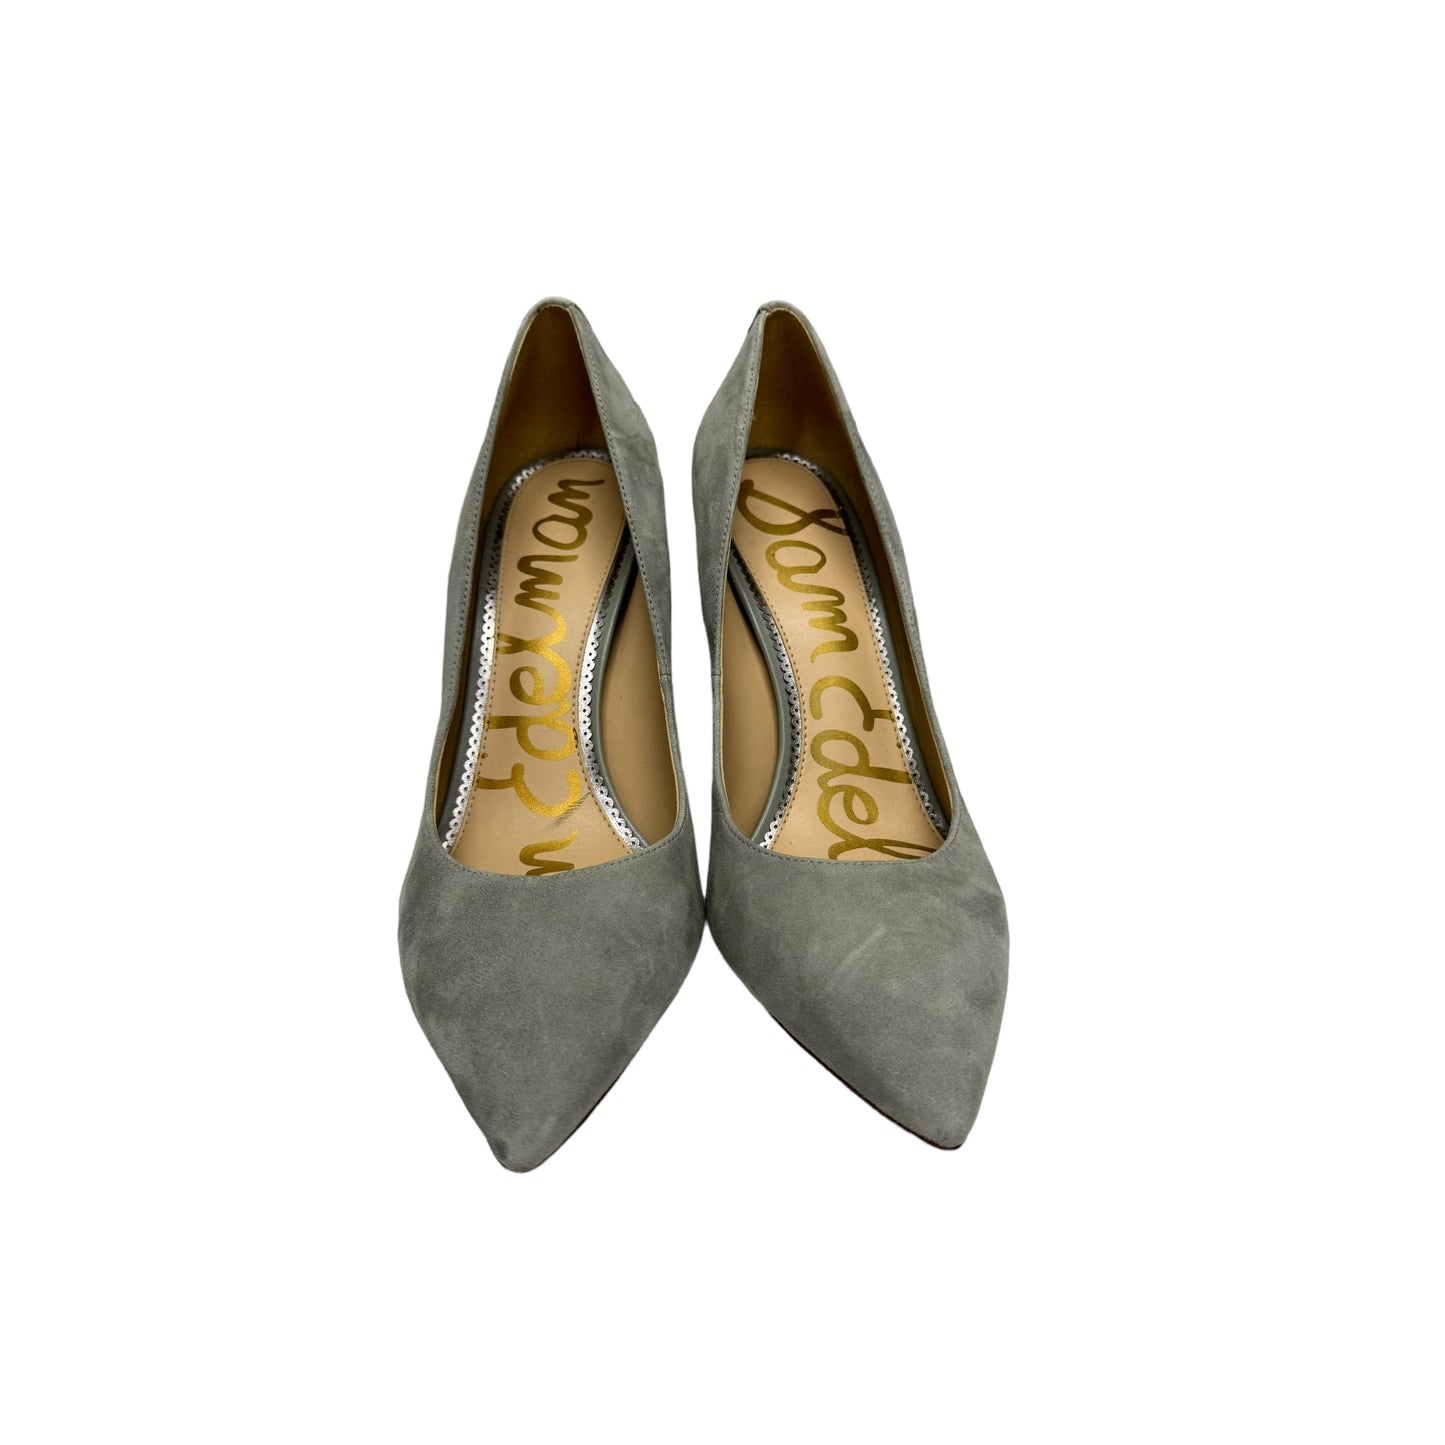 Shoes Heels Stiletto By Sam Edelman  Size: 10